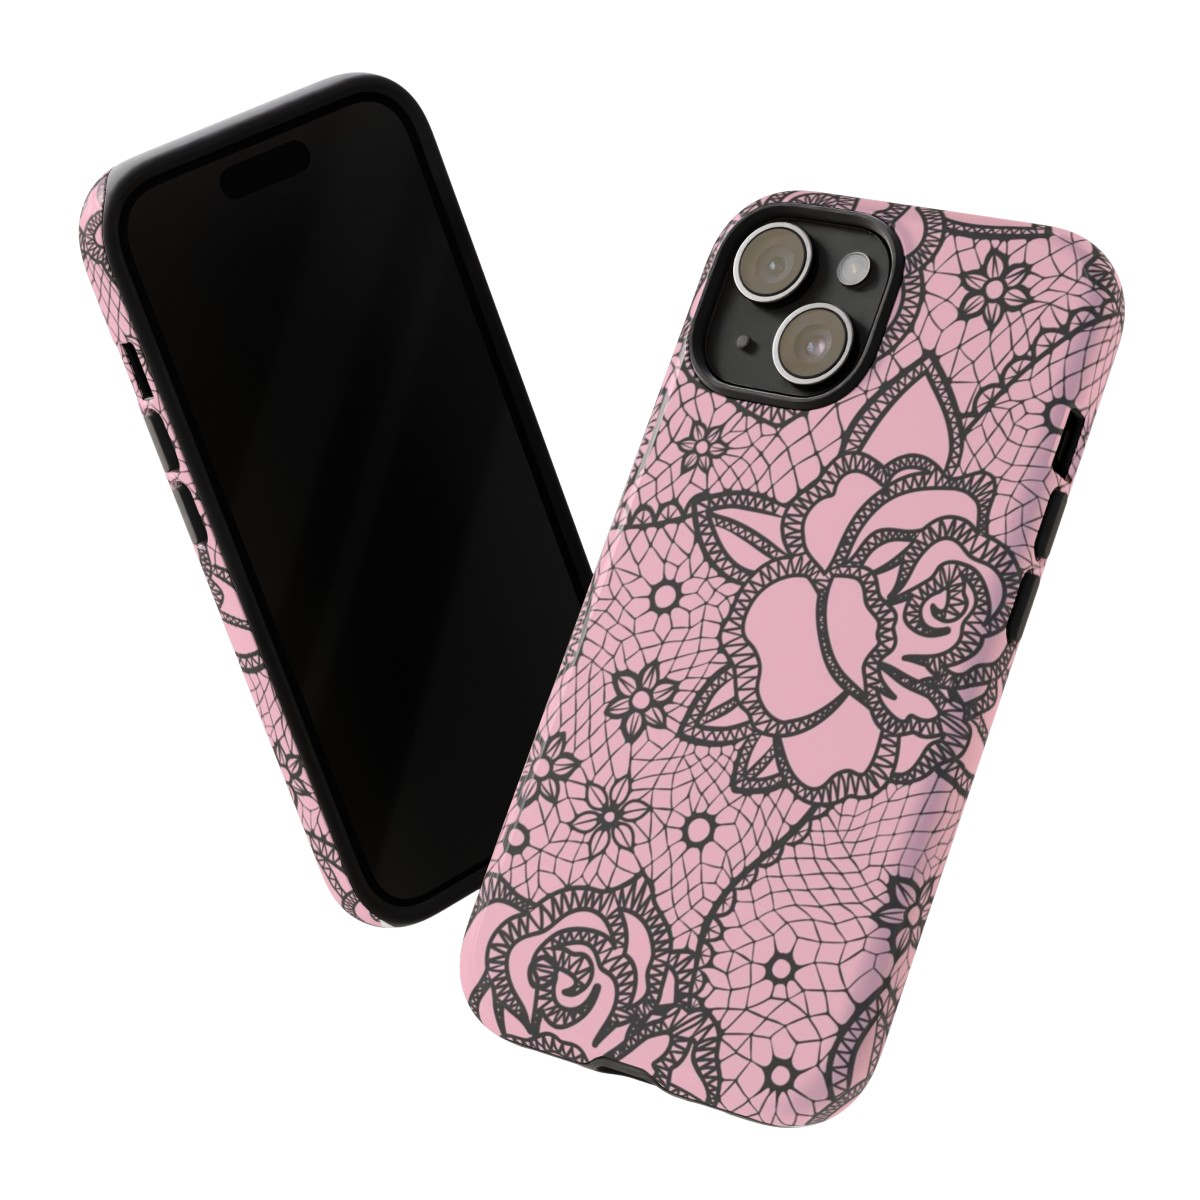 Phone Cases Black Rose product thumbnail image